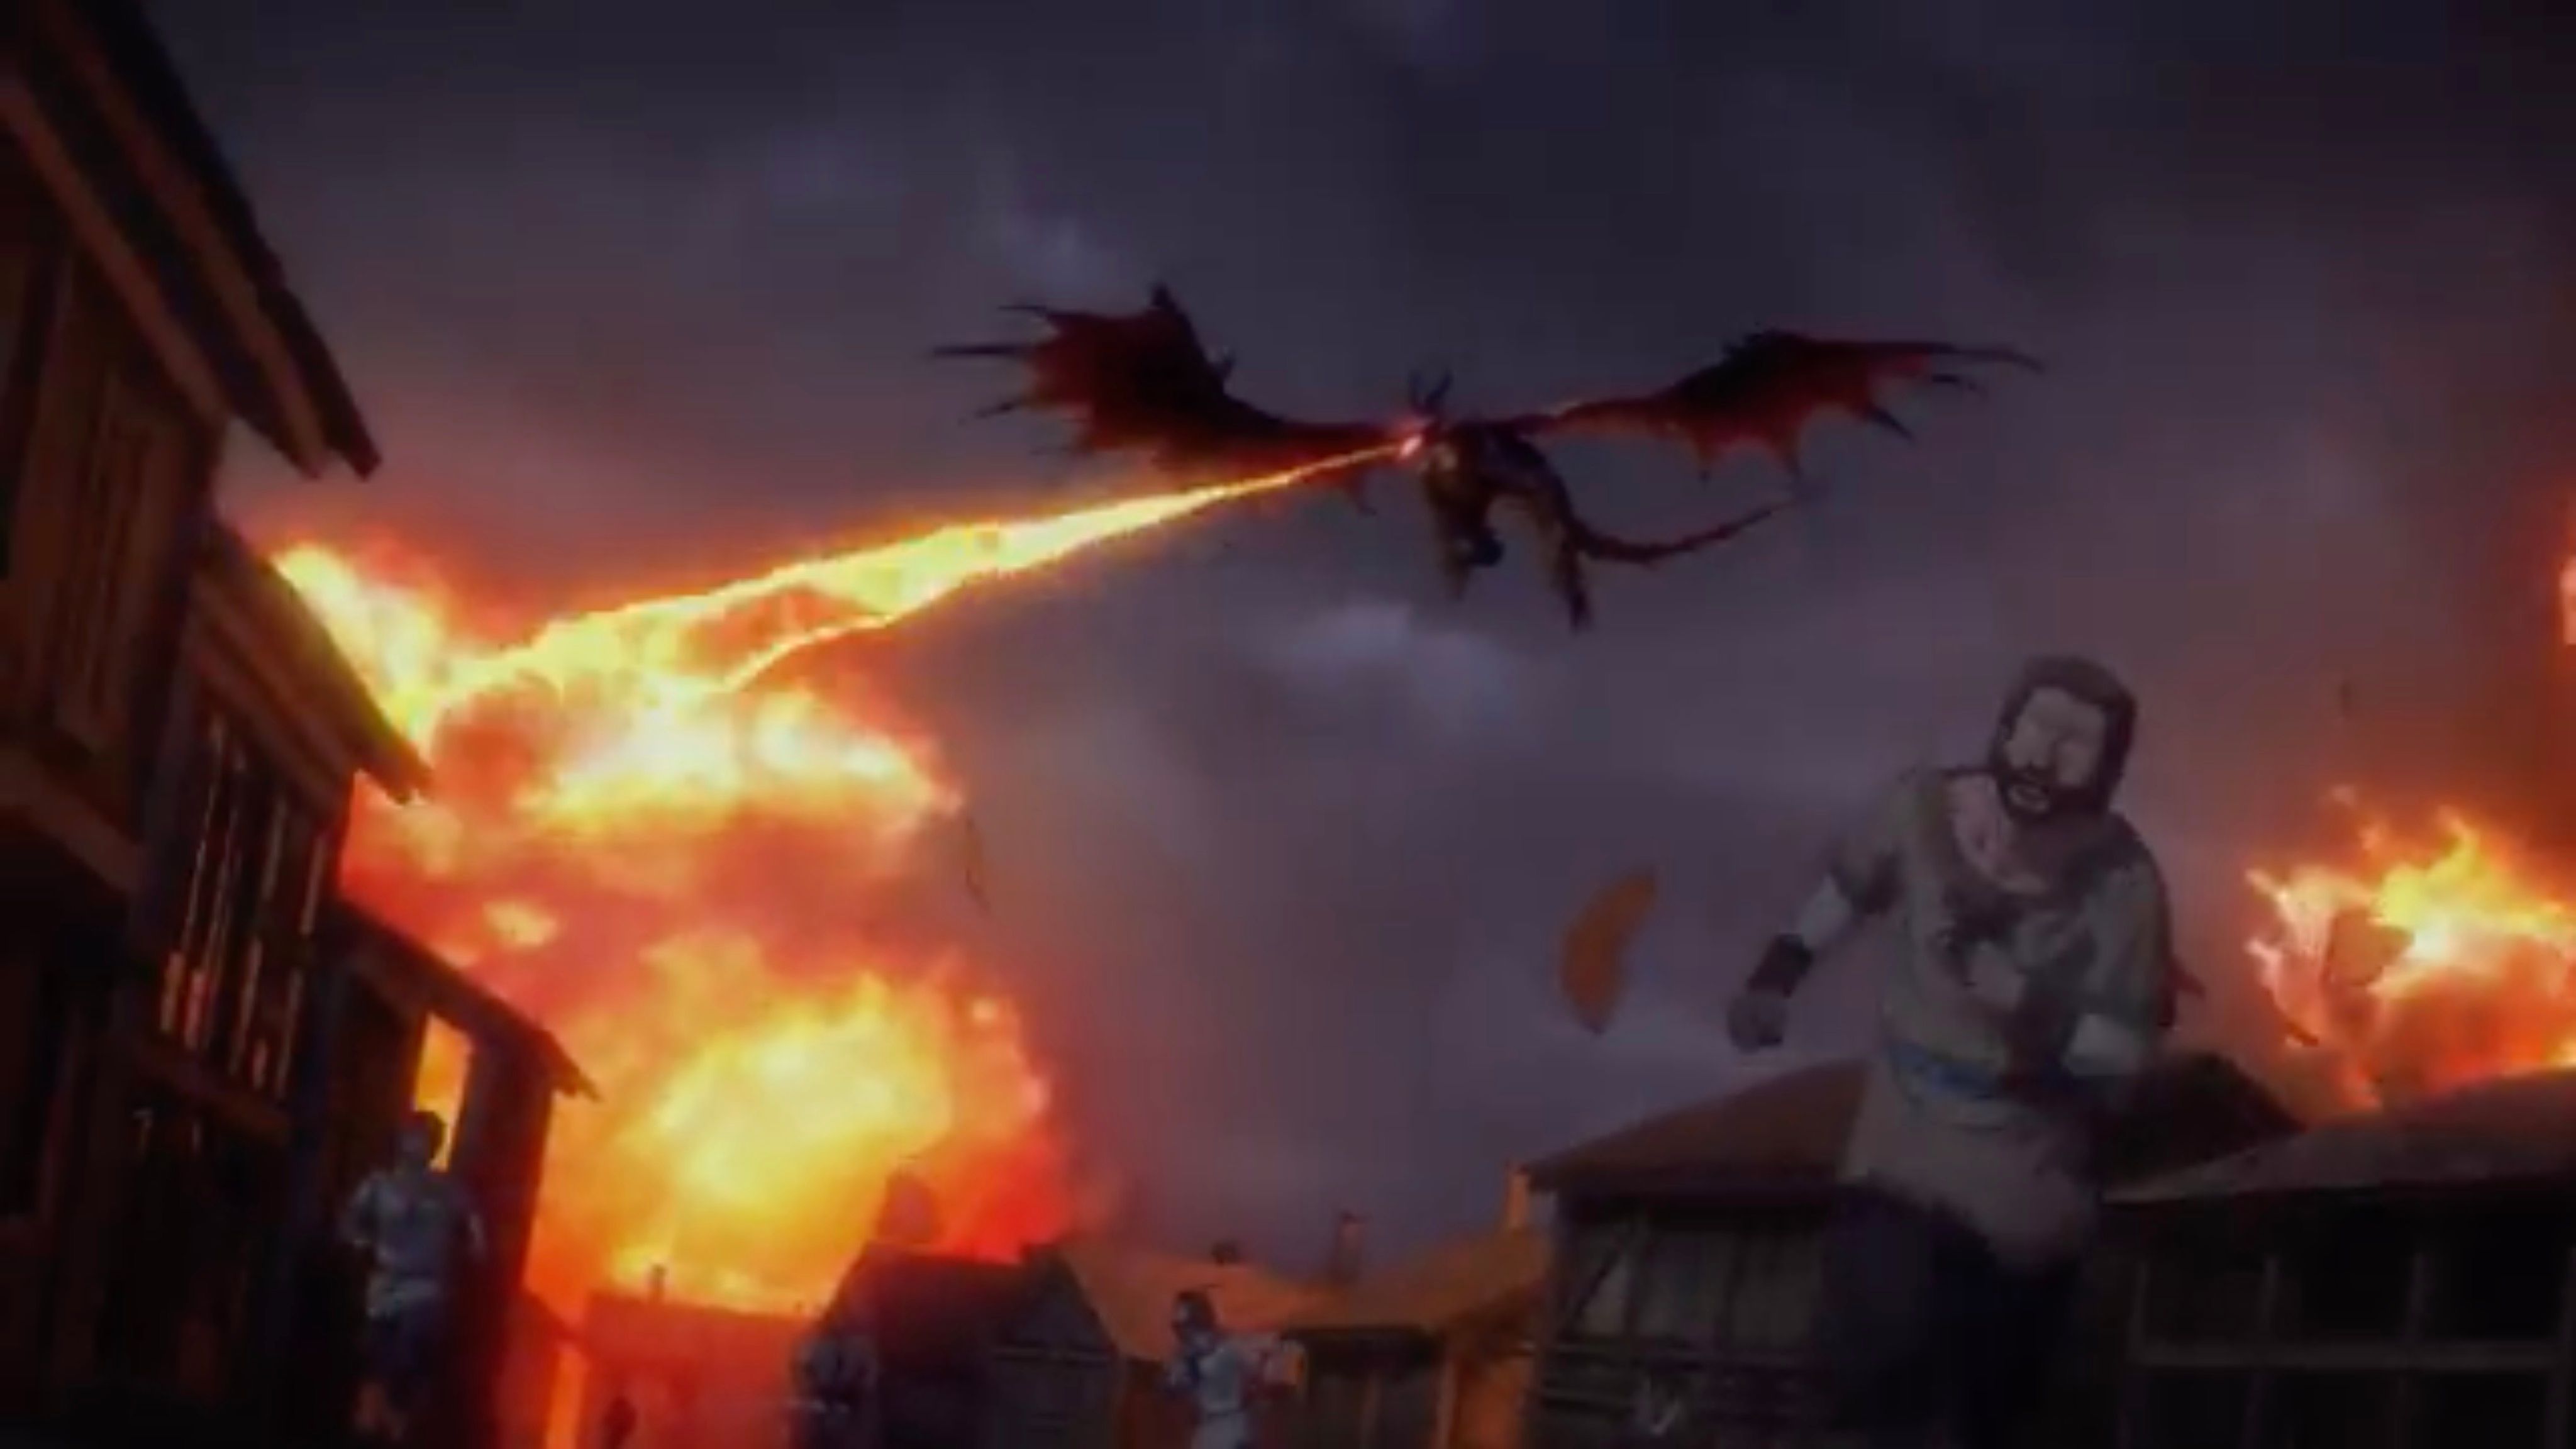 A screenshot from the Dragon's Dogma's anime